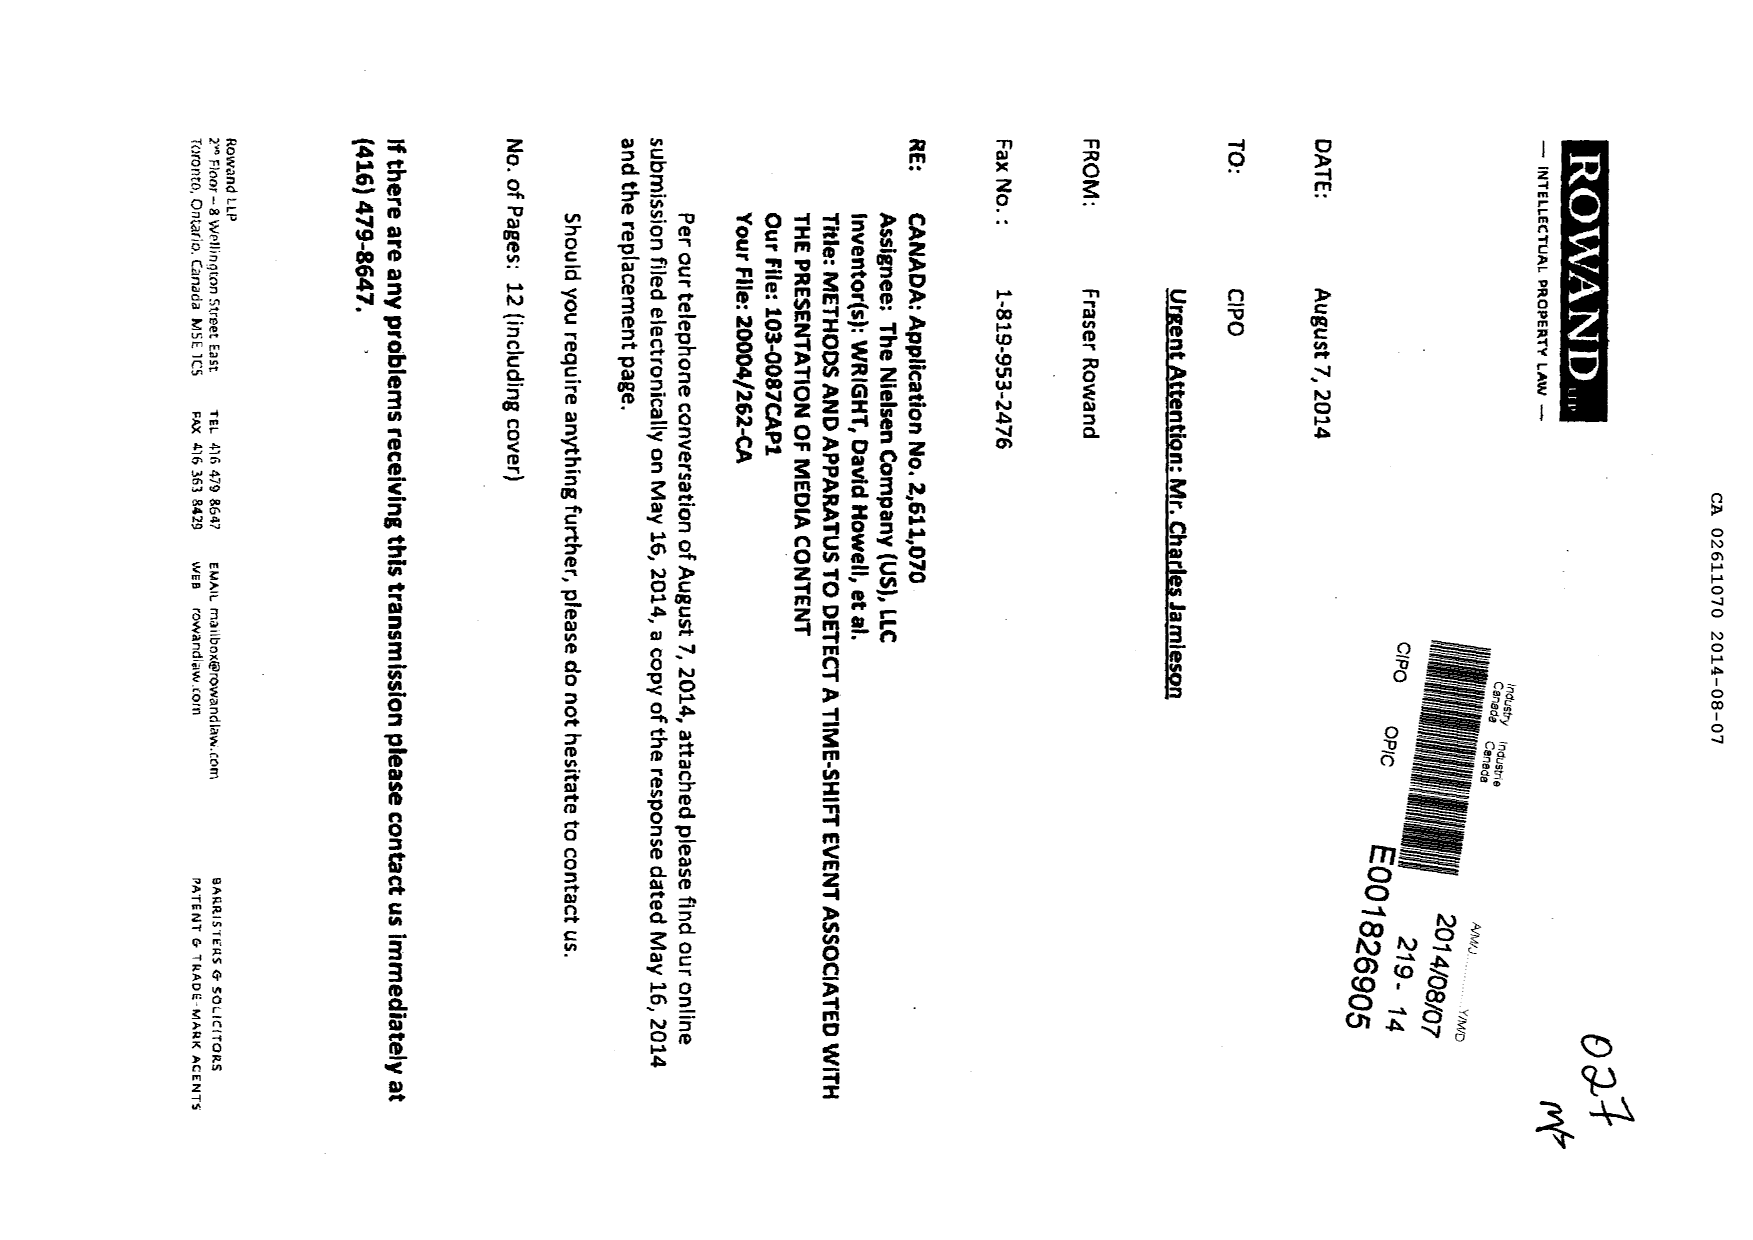 Canadian Patent Document 2611070. Prosecution-Amendment 20131207. Image 1 of 12